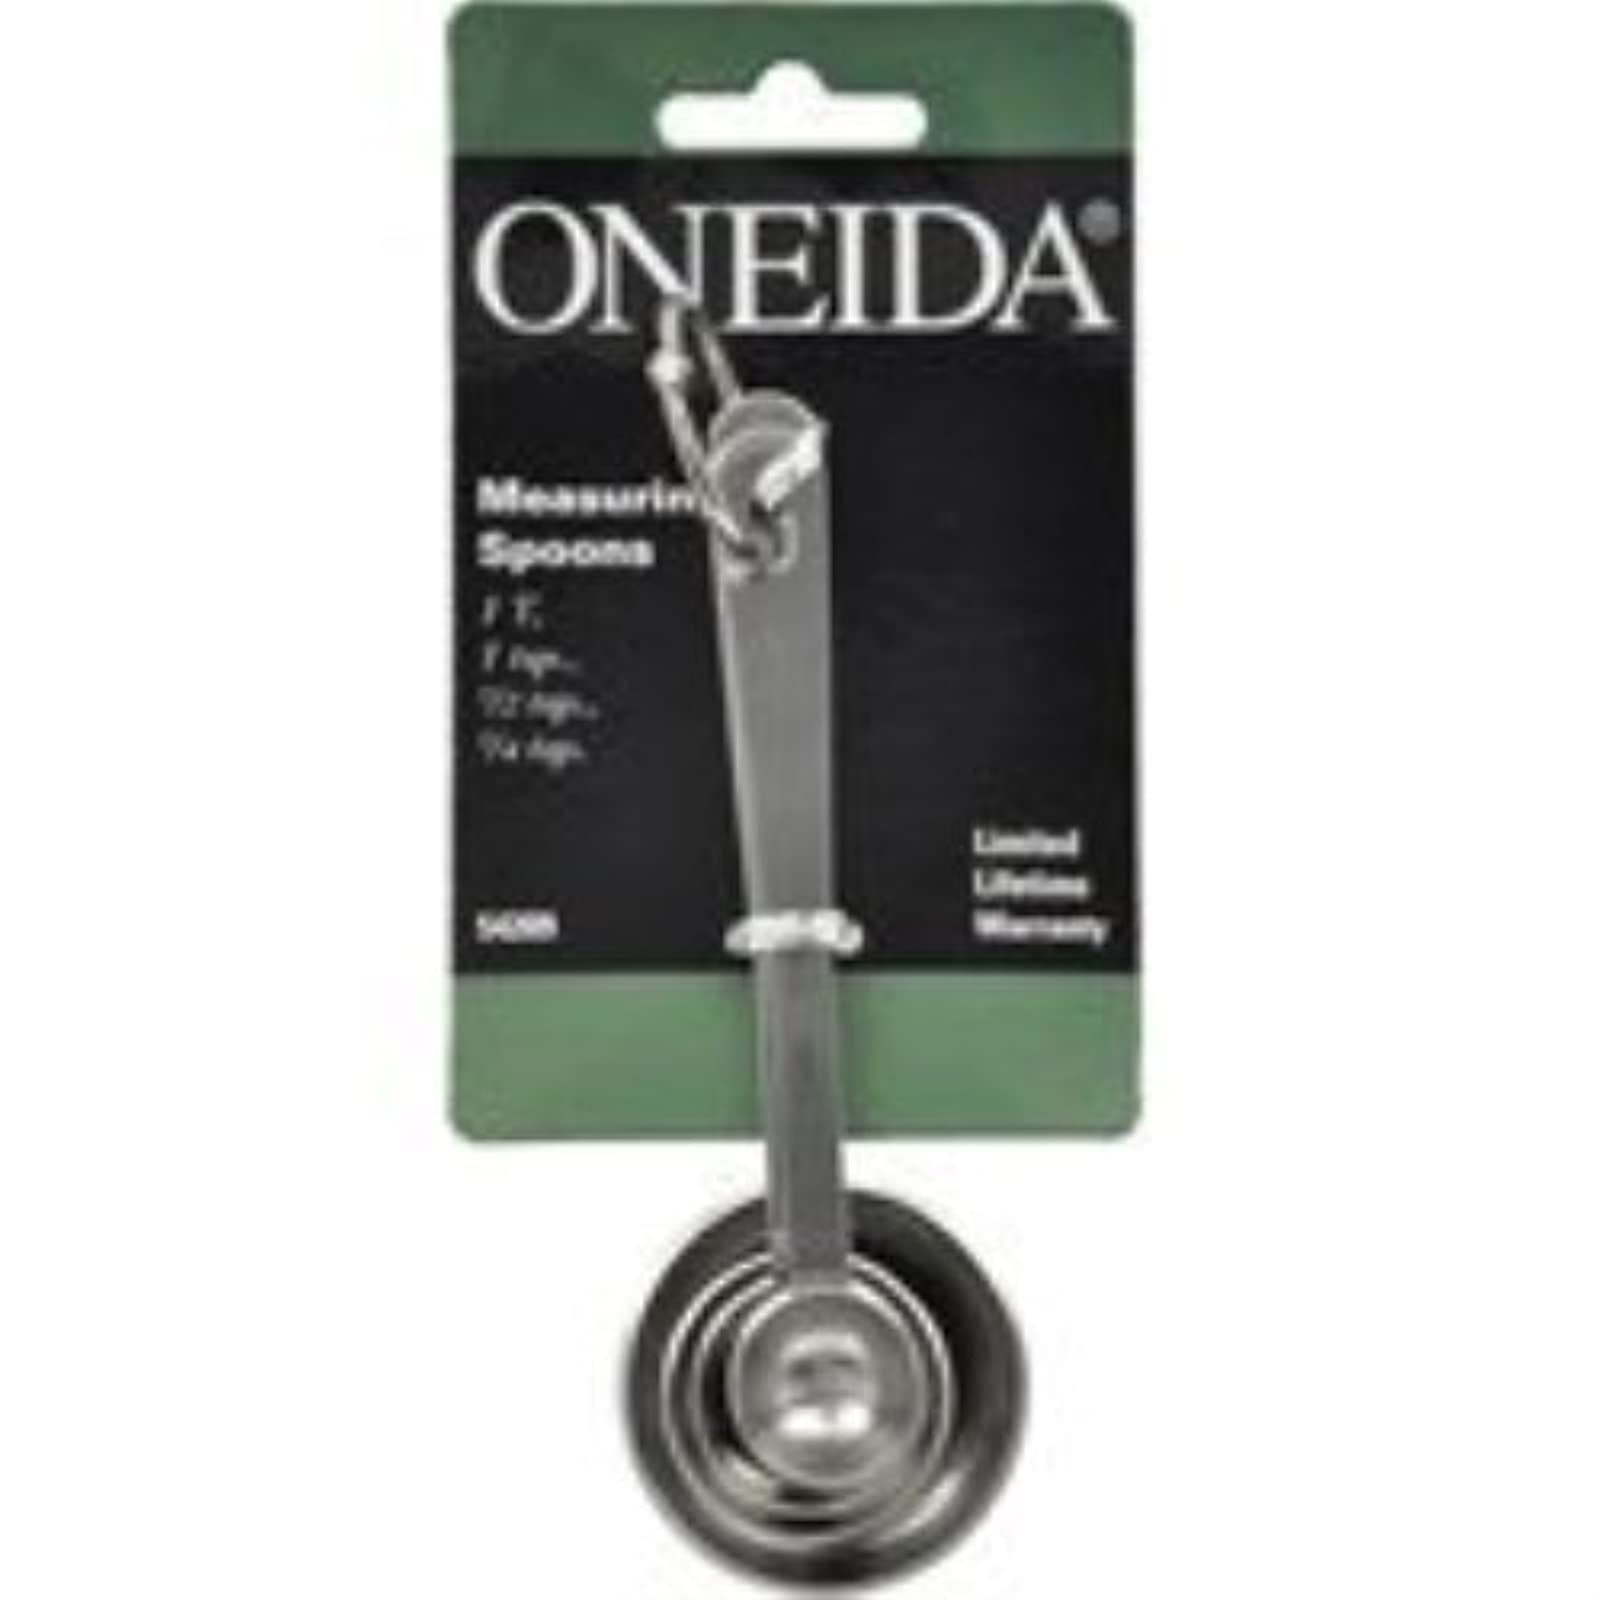 Oneida 54209 Measuring Spoon Set Stainless Steel - 4 Pieces - Walmart Oneida Stainless Steel Measuring Spoons